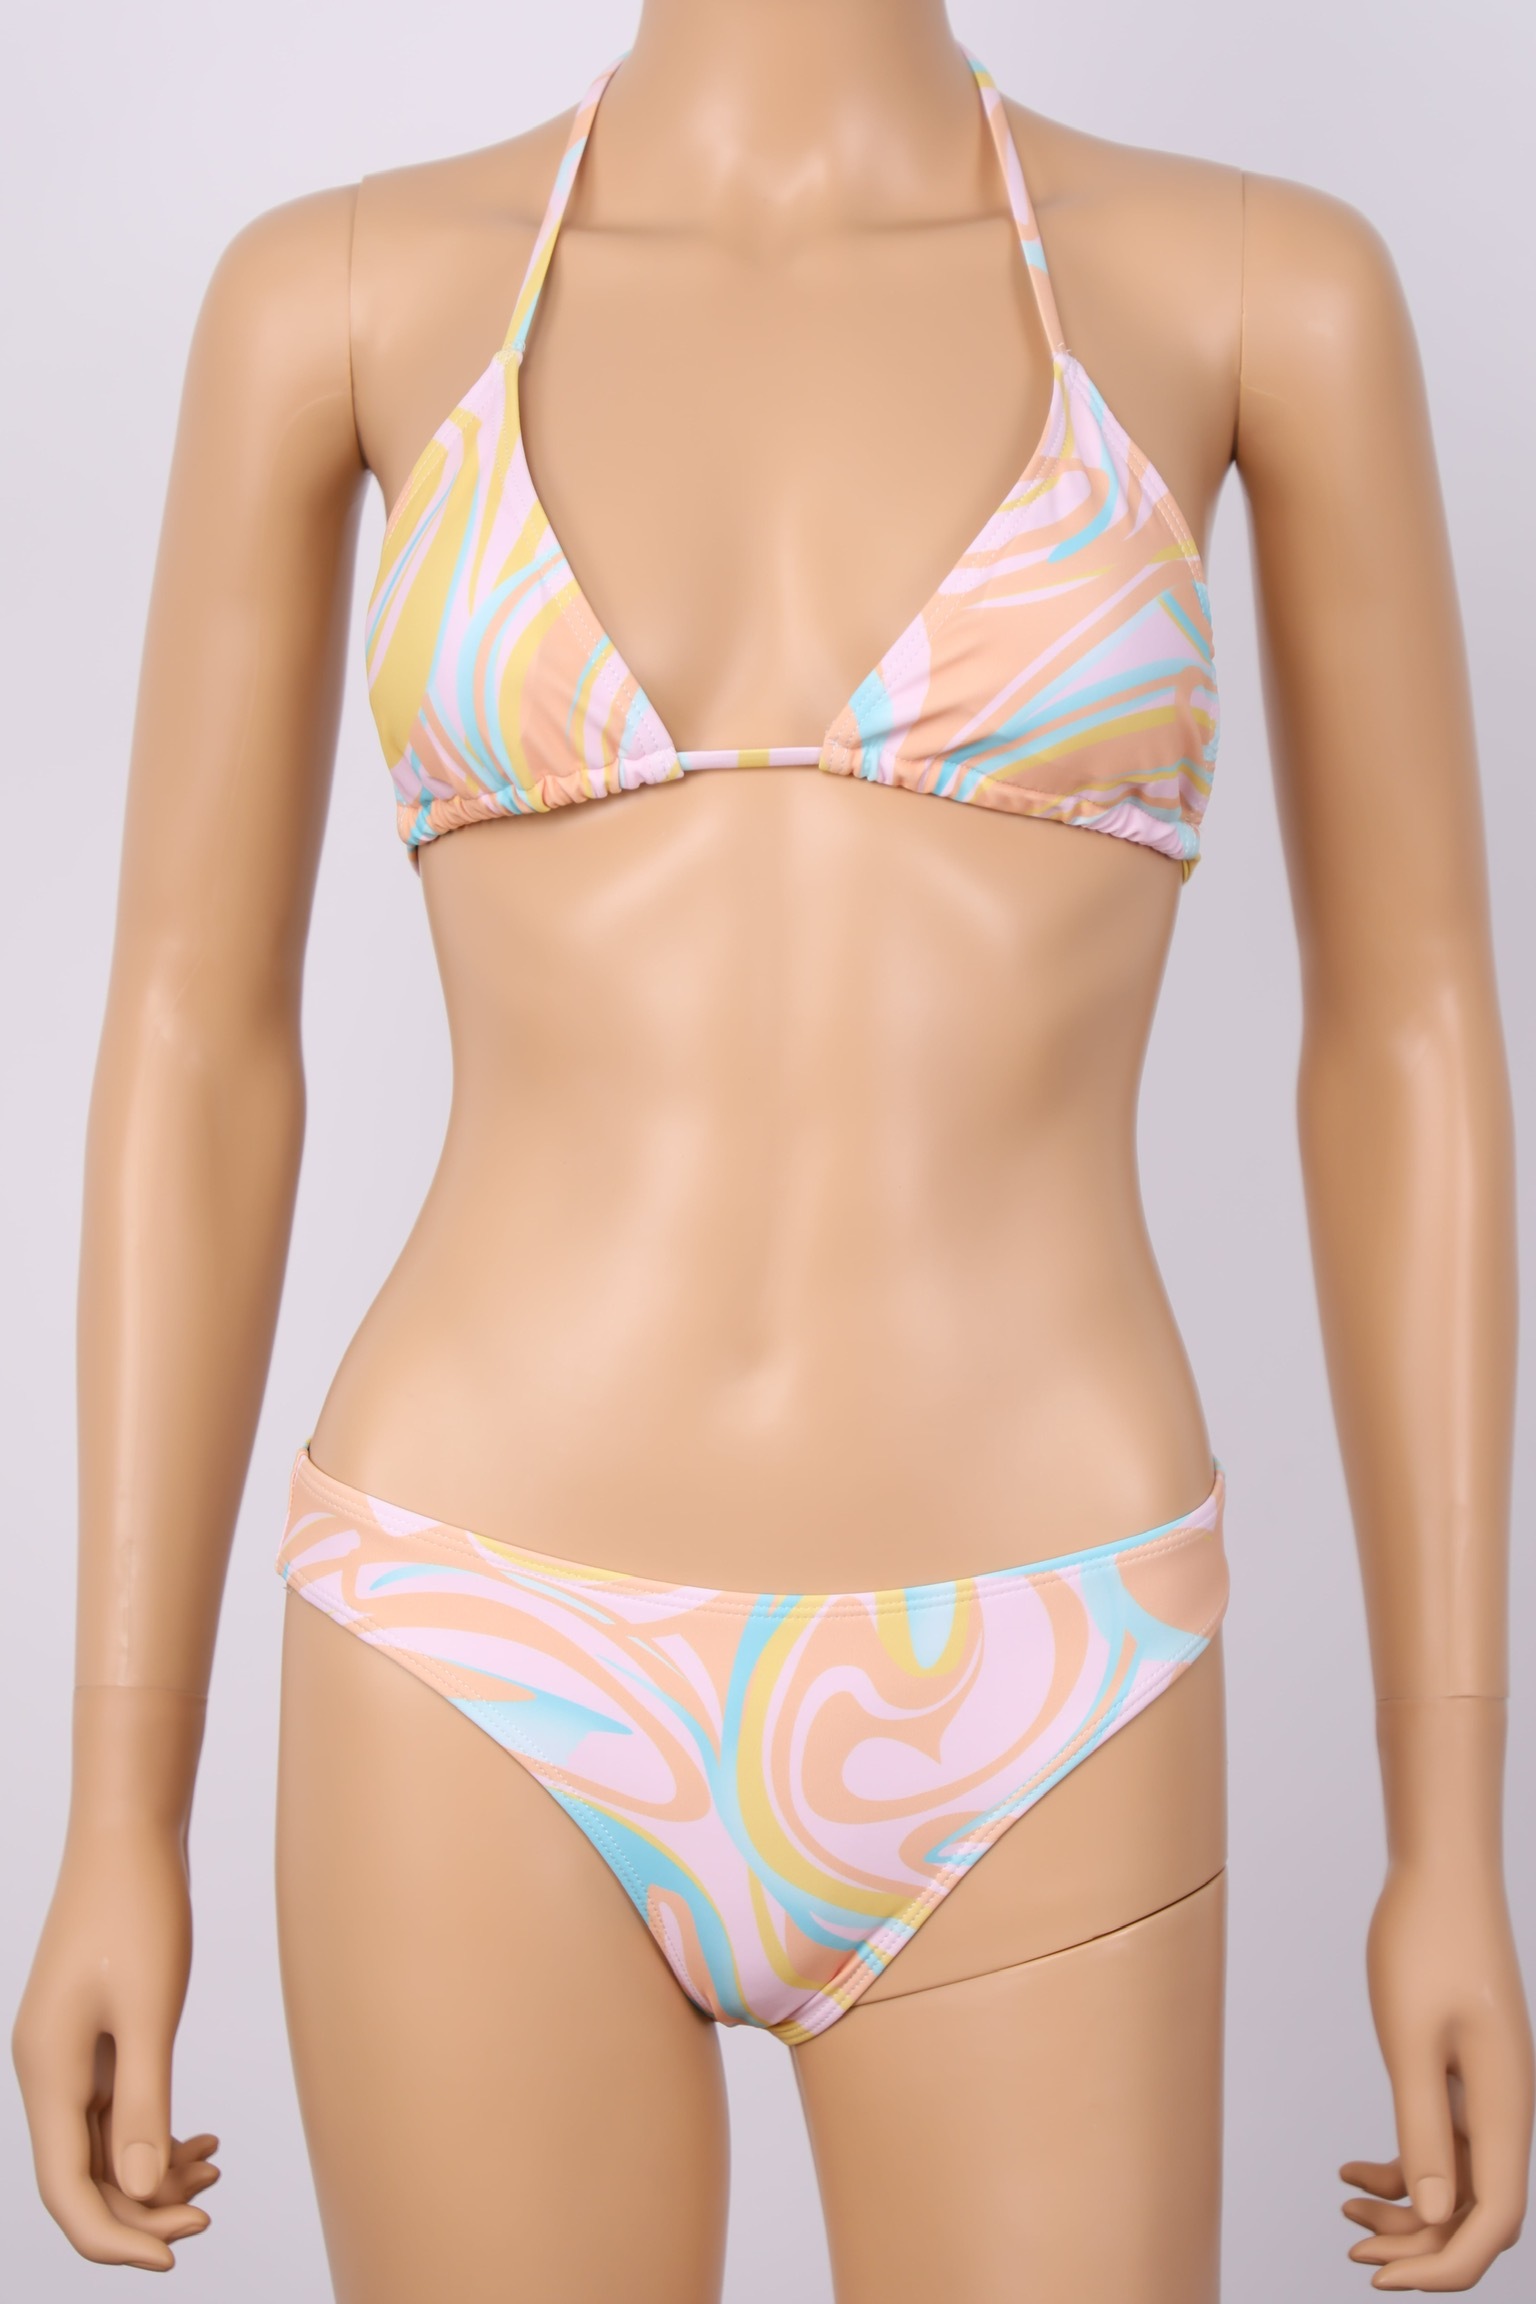 Pick Sunset Bikini Swimsuits For You